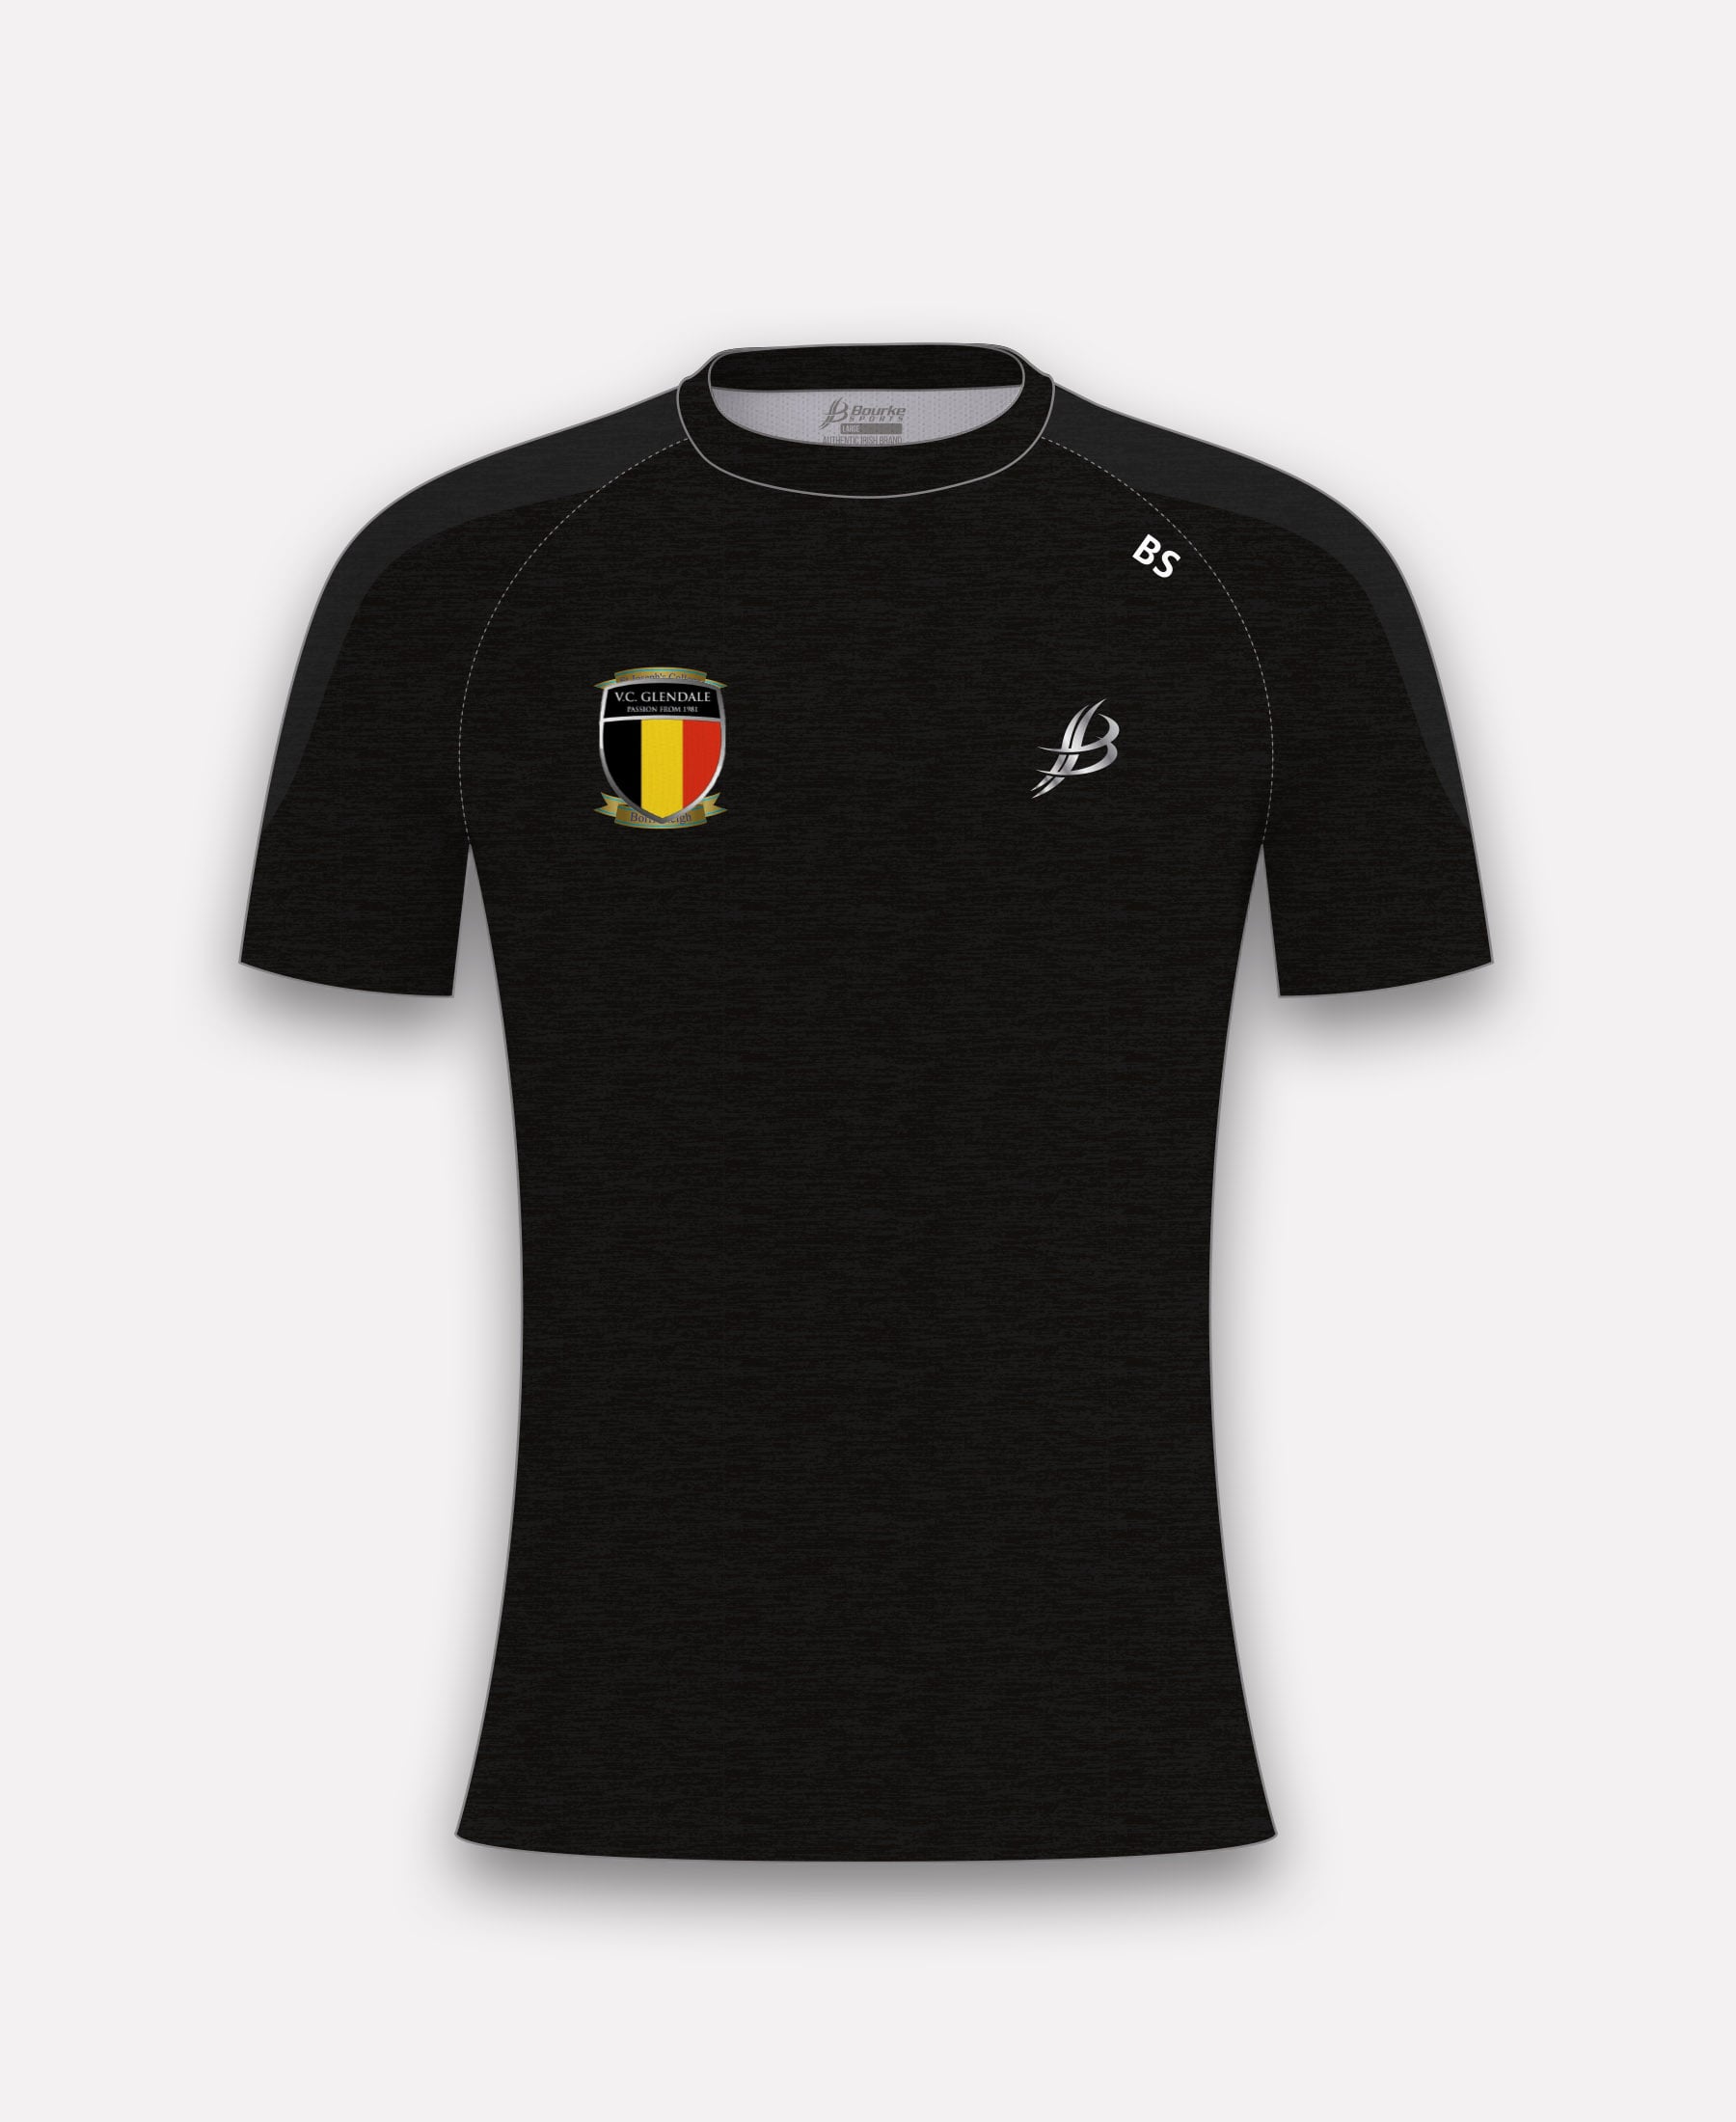 VC Glendale BEO T-Shirt (Black)